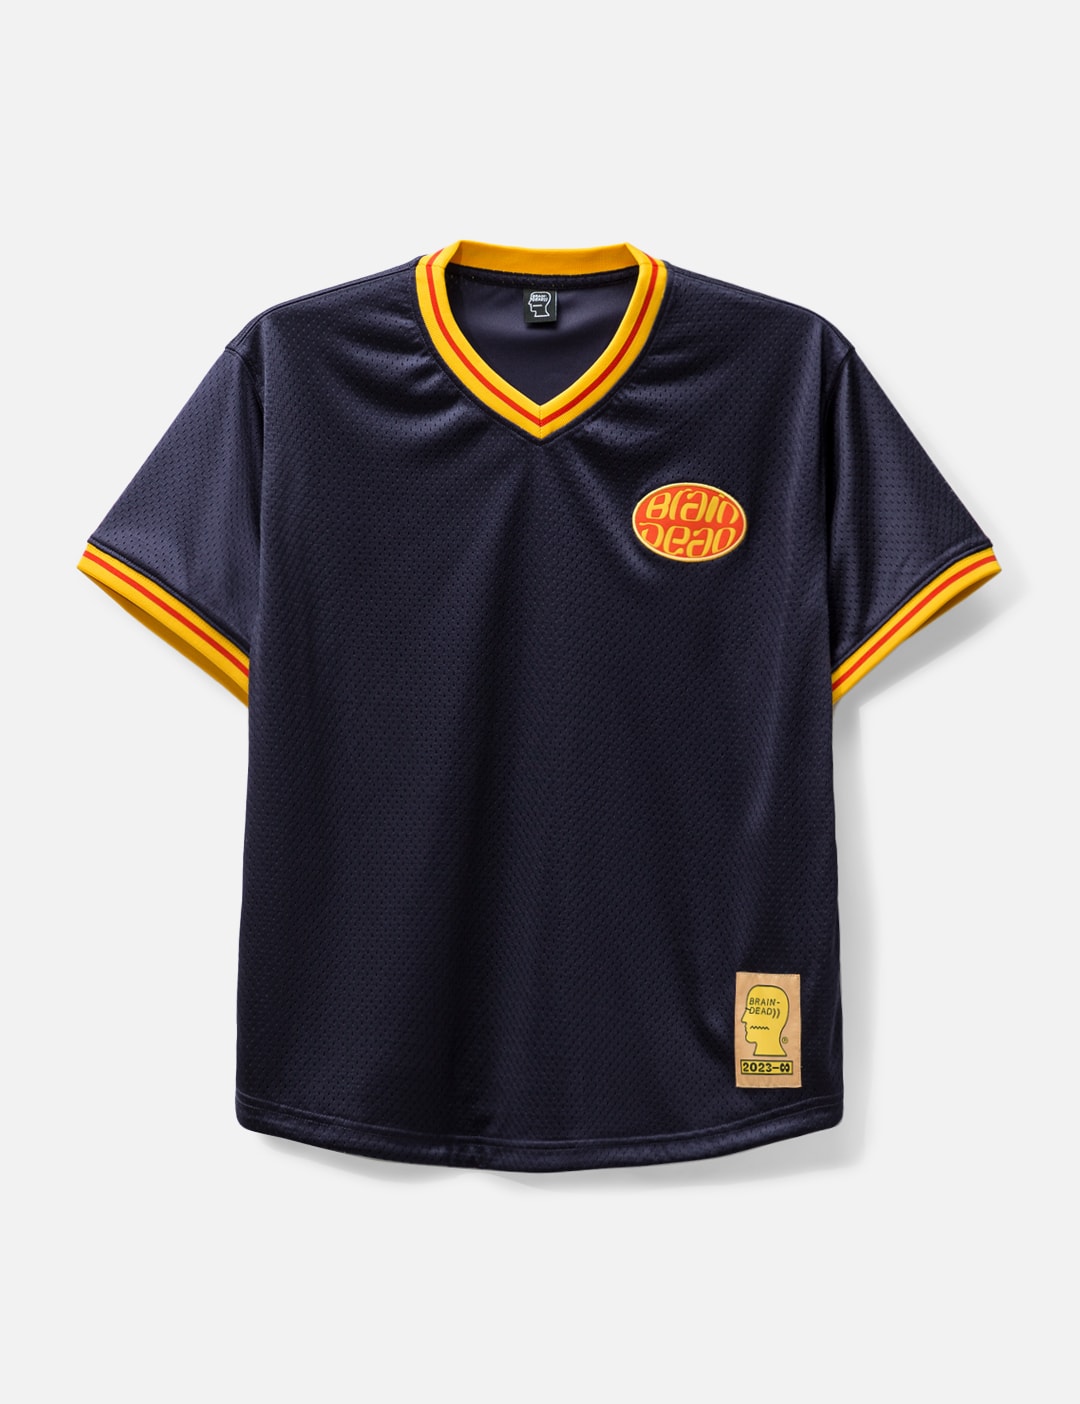 The Simpsons Boys Baseball Jersey - Homer, Bart, Lisa Mesh Button Down Shirt Mesh Baseball Jersey